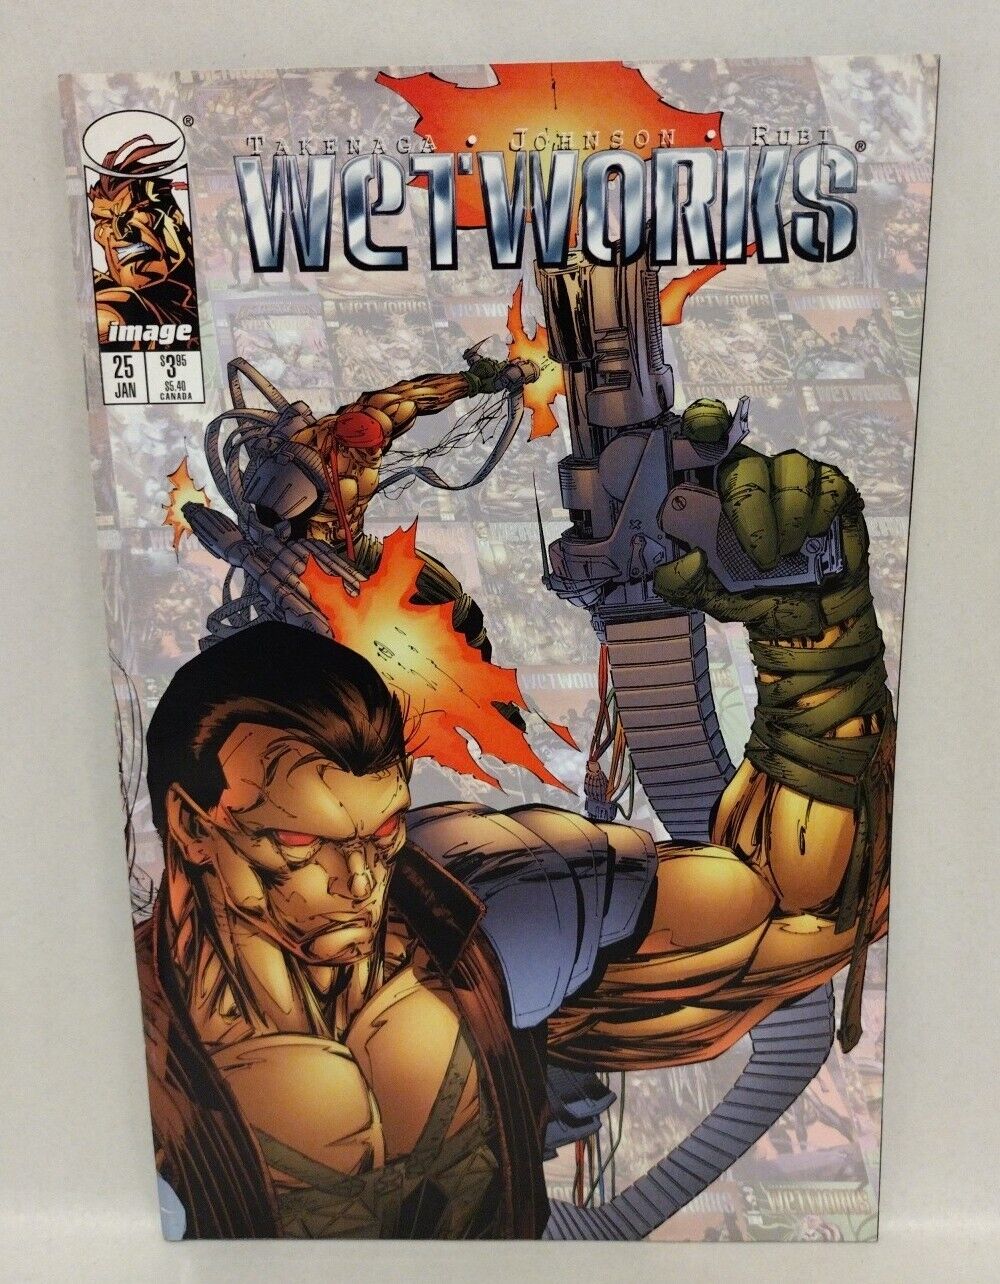 Wetworks (1997) Image Comic Lot Set #25 26 27 28 29 Francis Takenaga 